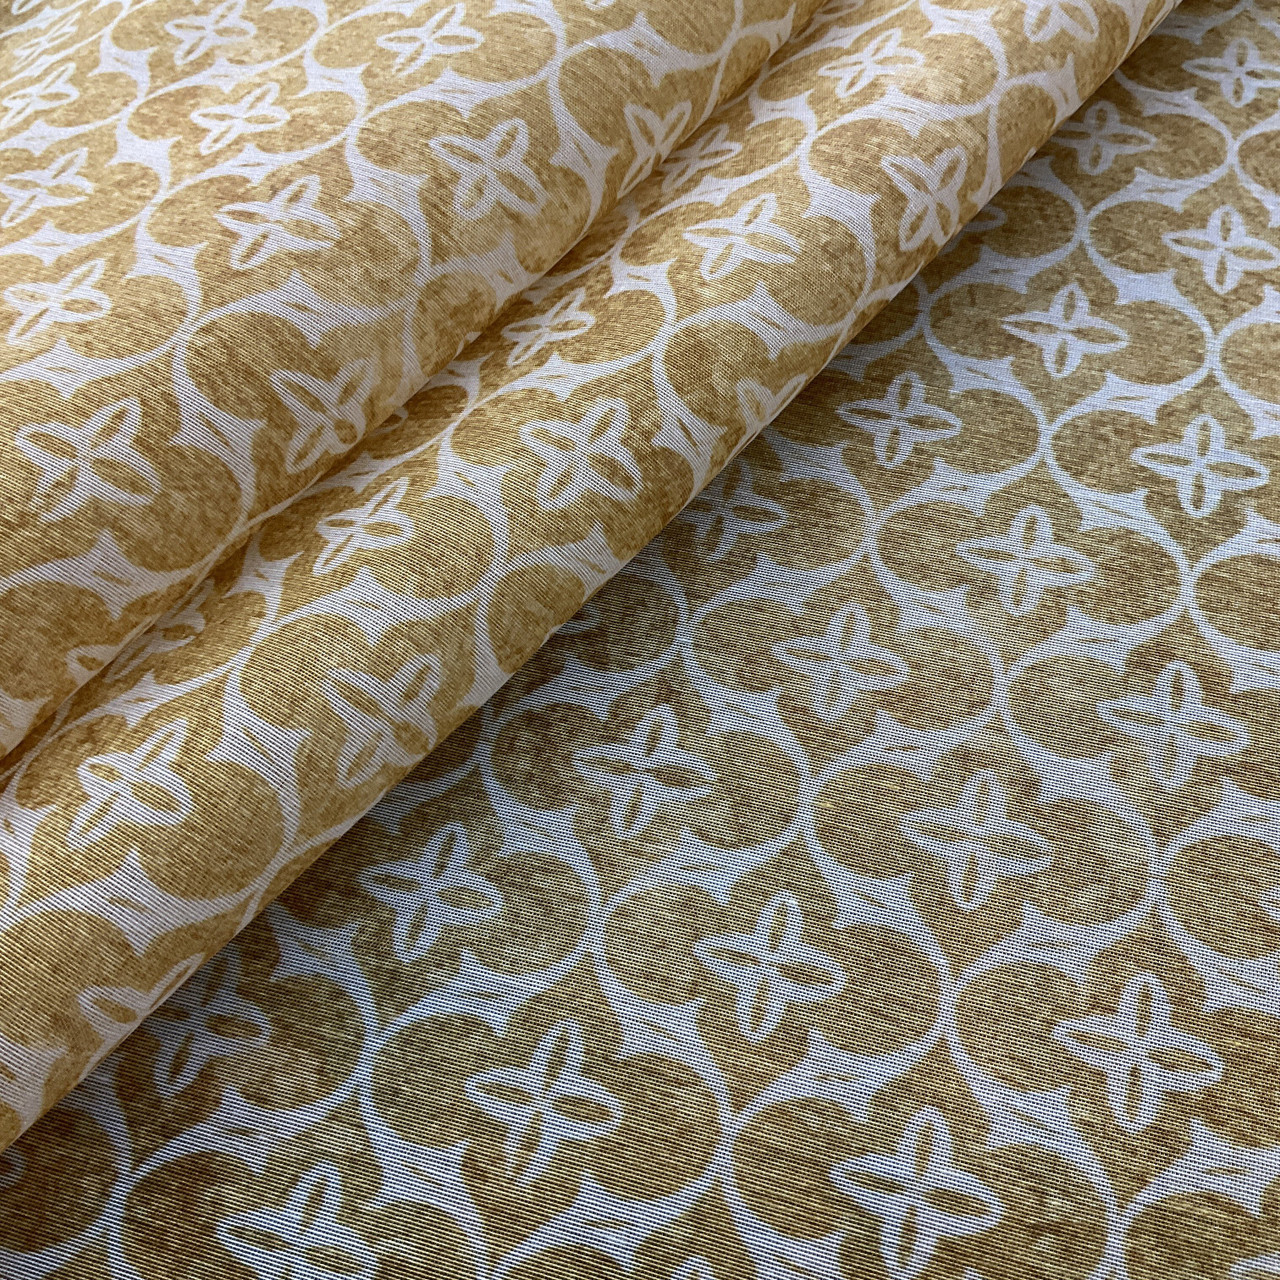 Martha Stewart Bedford Ogee Batiste Gold, Very Lightweight Batiste Fabric, Home Decor Fabric